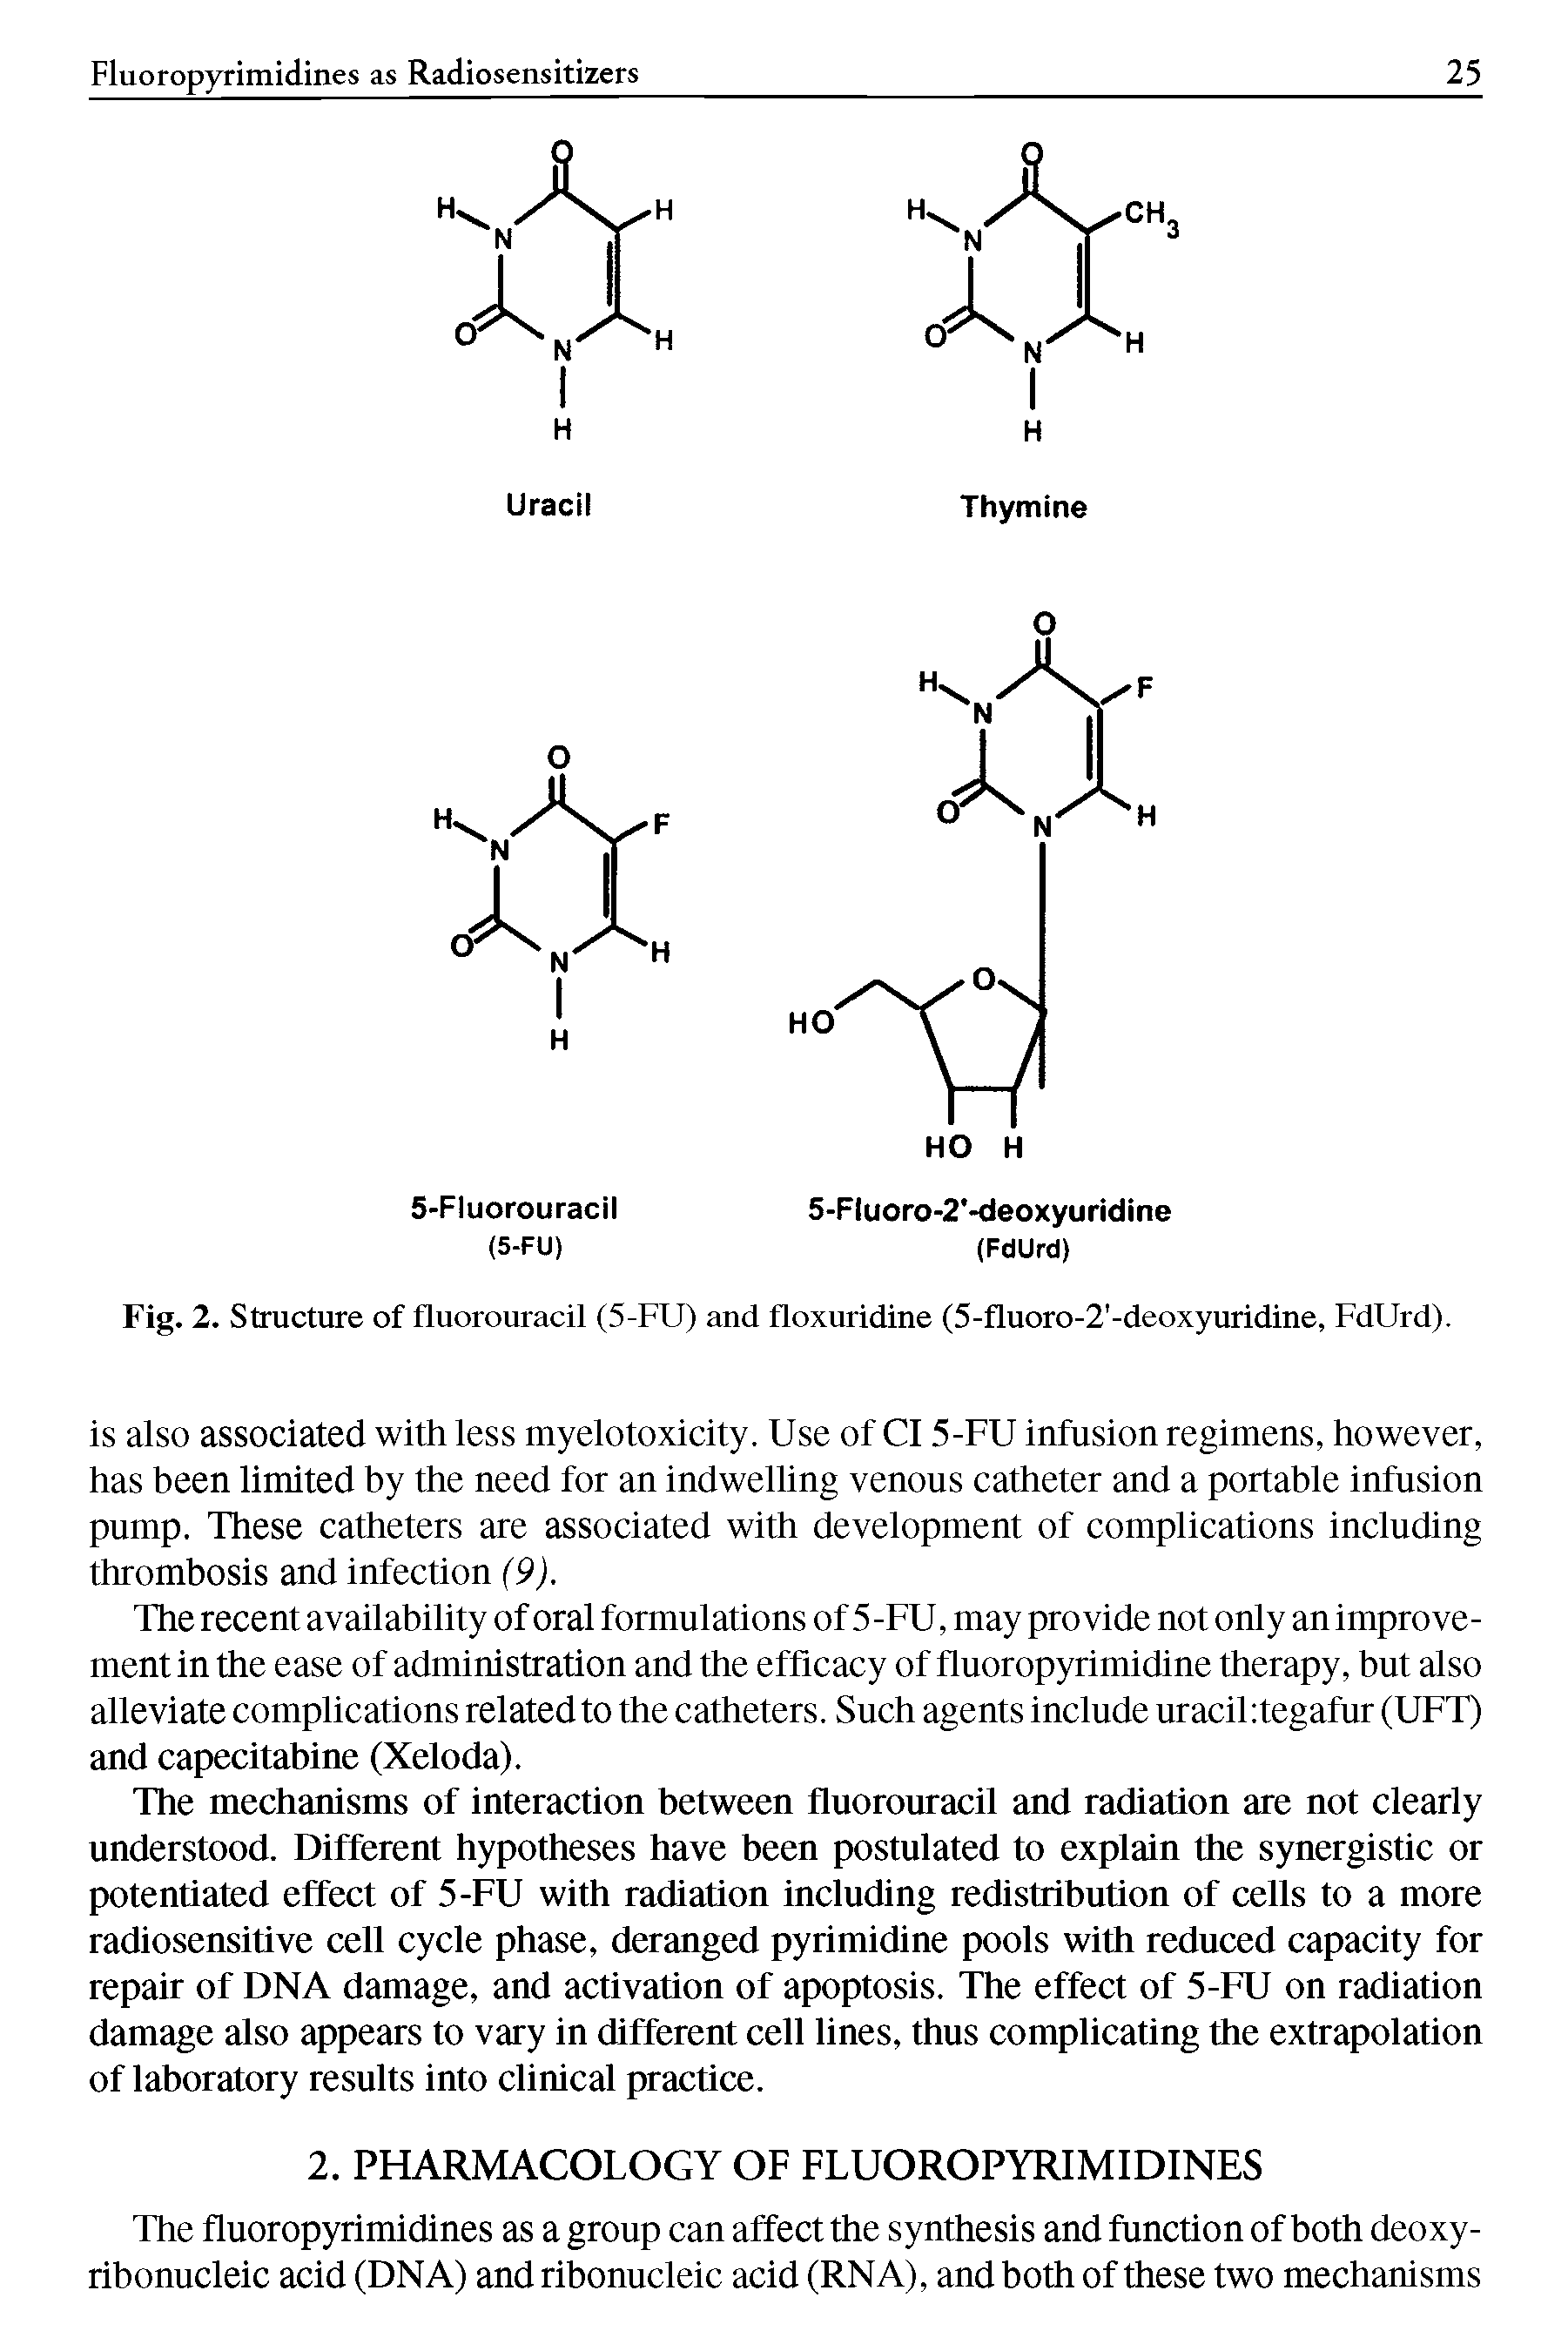 Fig. 2. Structure of fluorouracil (5-FU) and floxuridine (5-fluoro-2 -deoxyuridine, FdUrd).